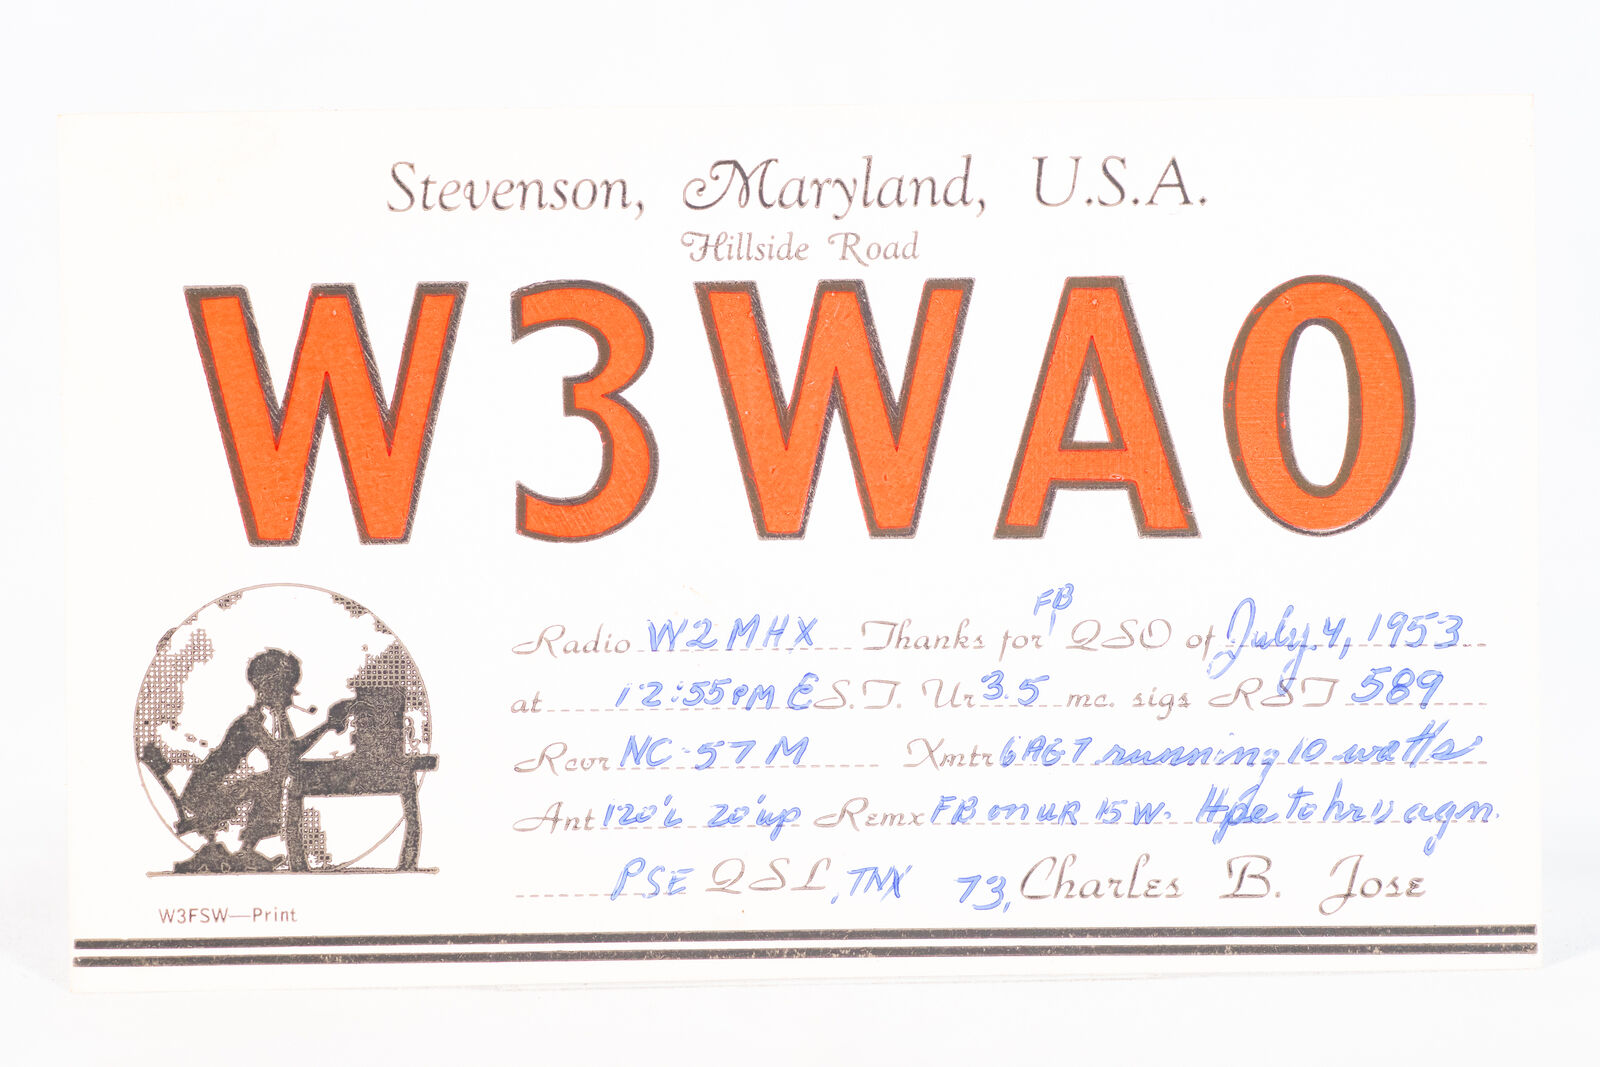 1953 Amateur Ham Radio QSL Card Stevenson Maryland W3WAO Charles Jose